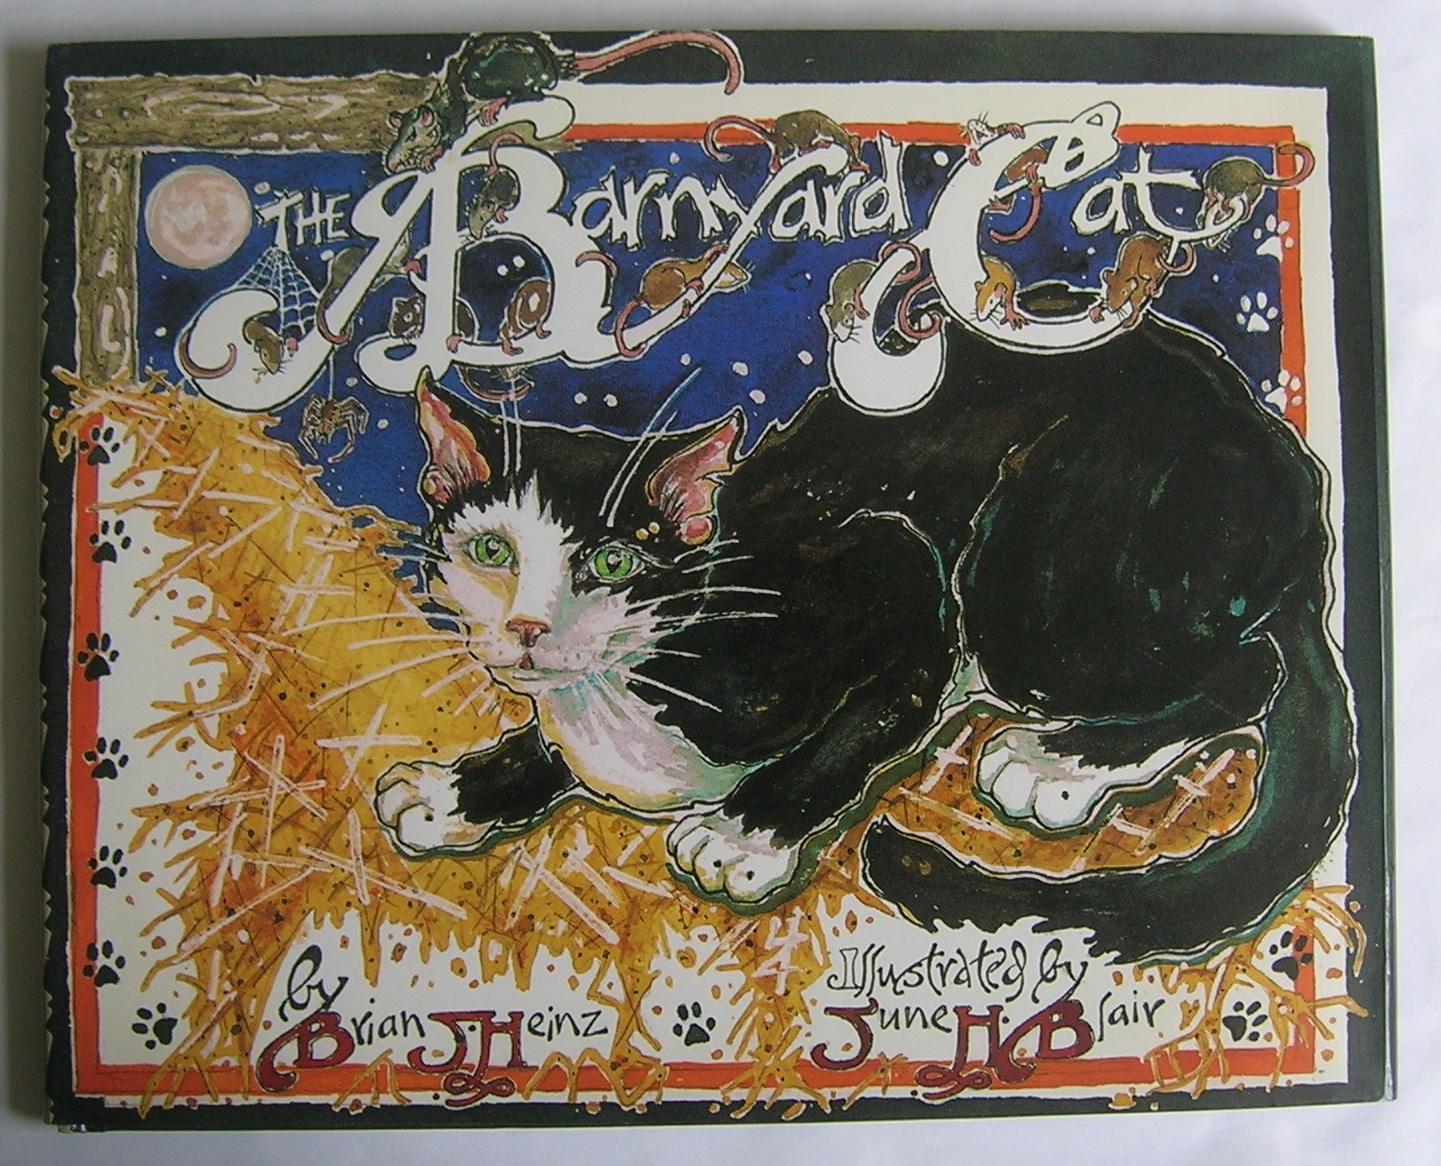 Barnyard (2006) - Cinema Cats